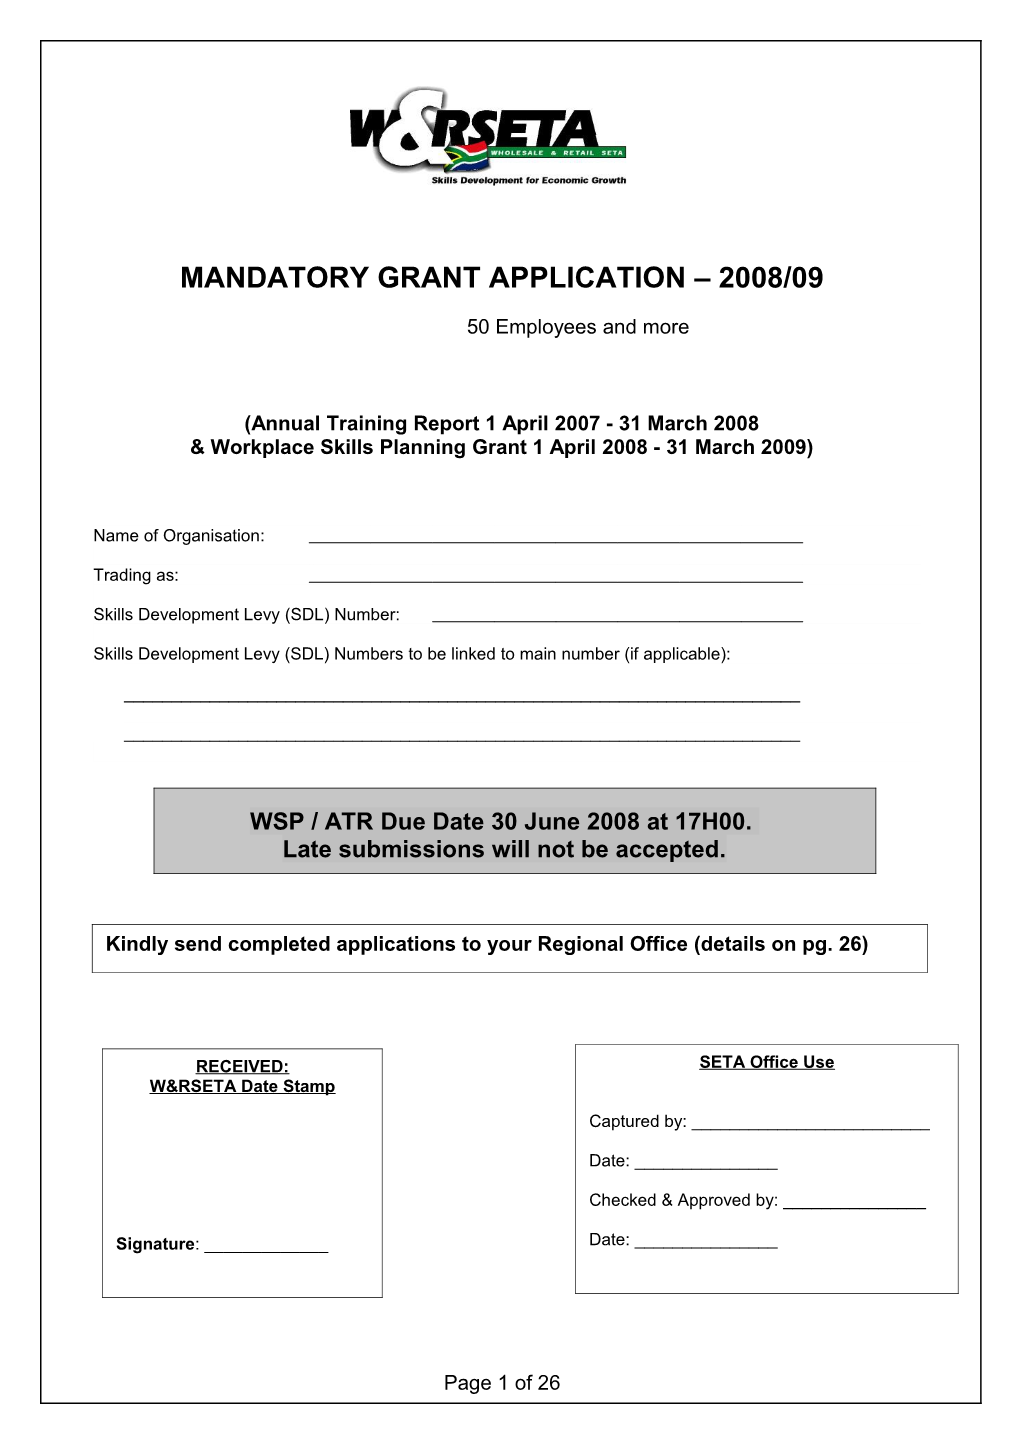 Mandatory Grant Application 2008/09